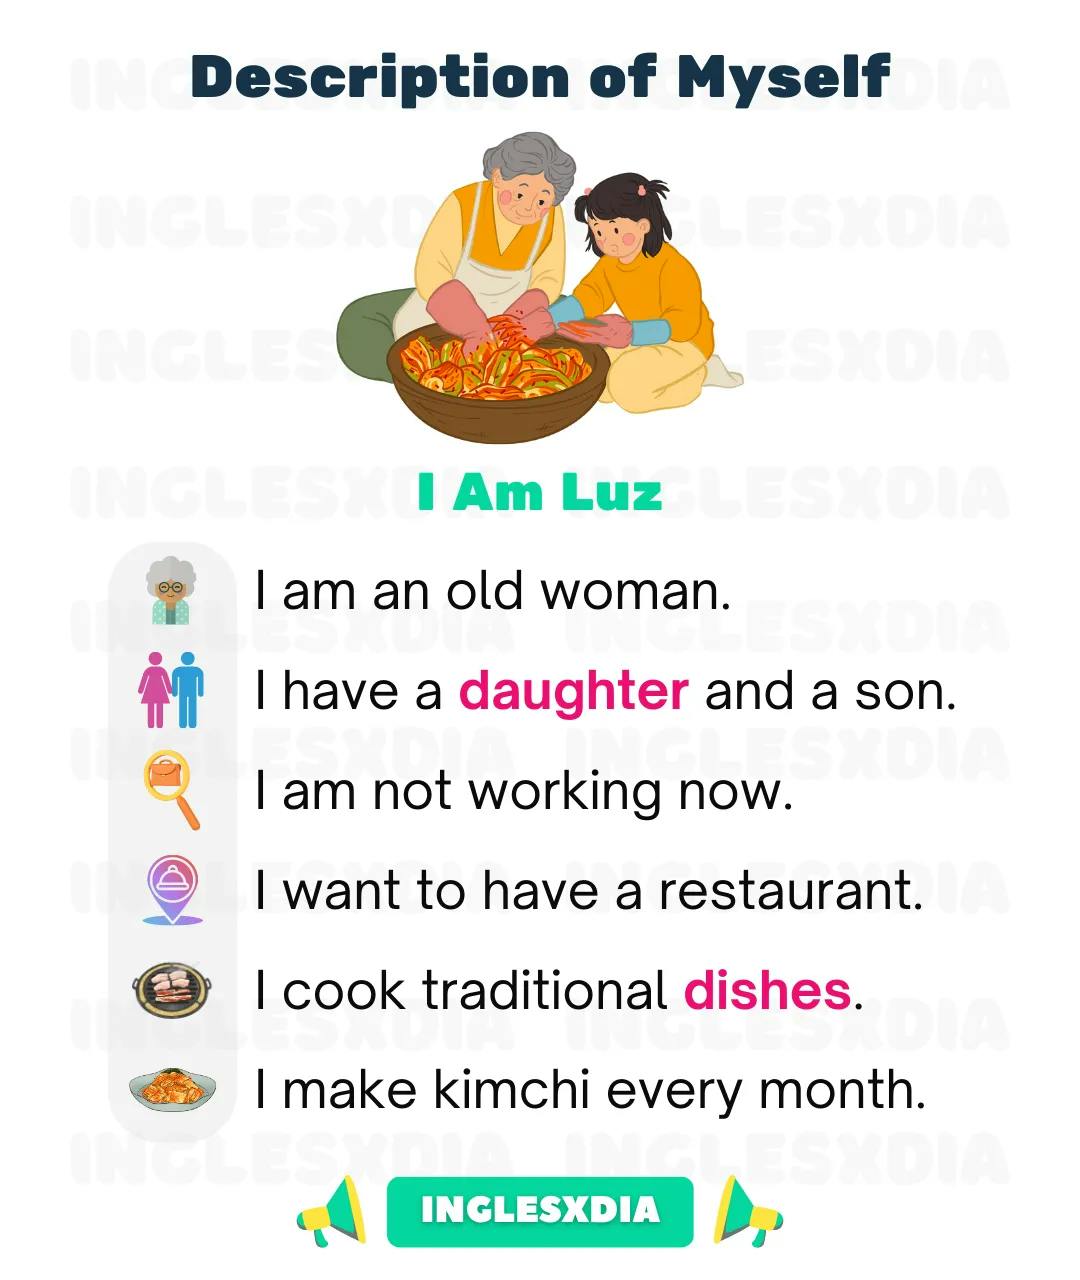 Curso de inglés en línea: Description of Myself · I Am Luz